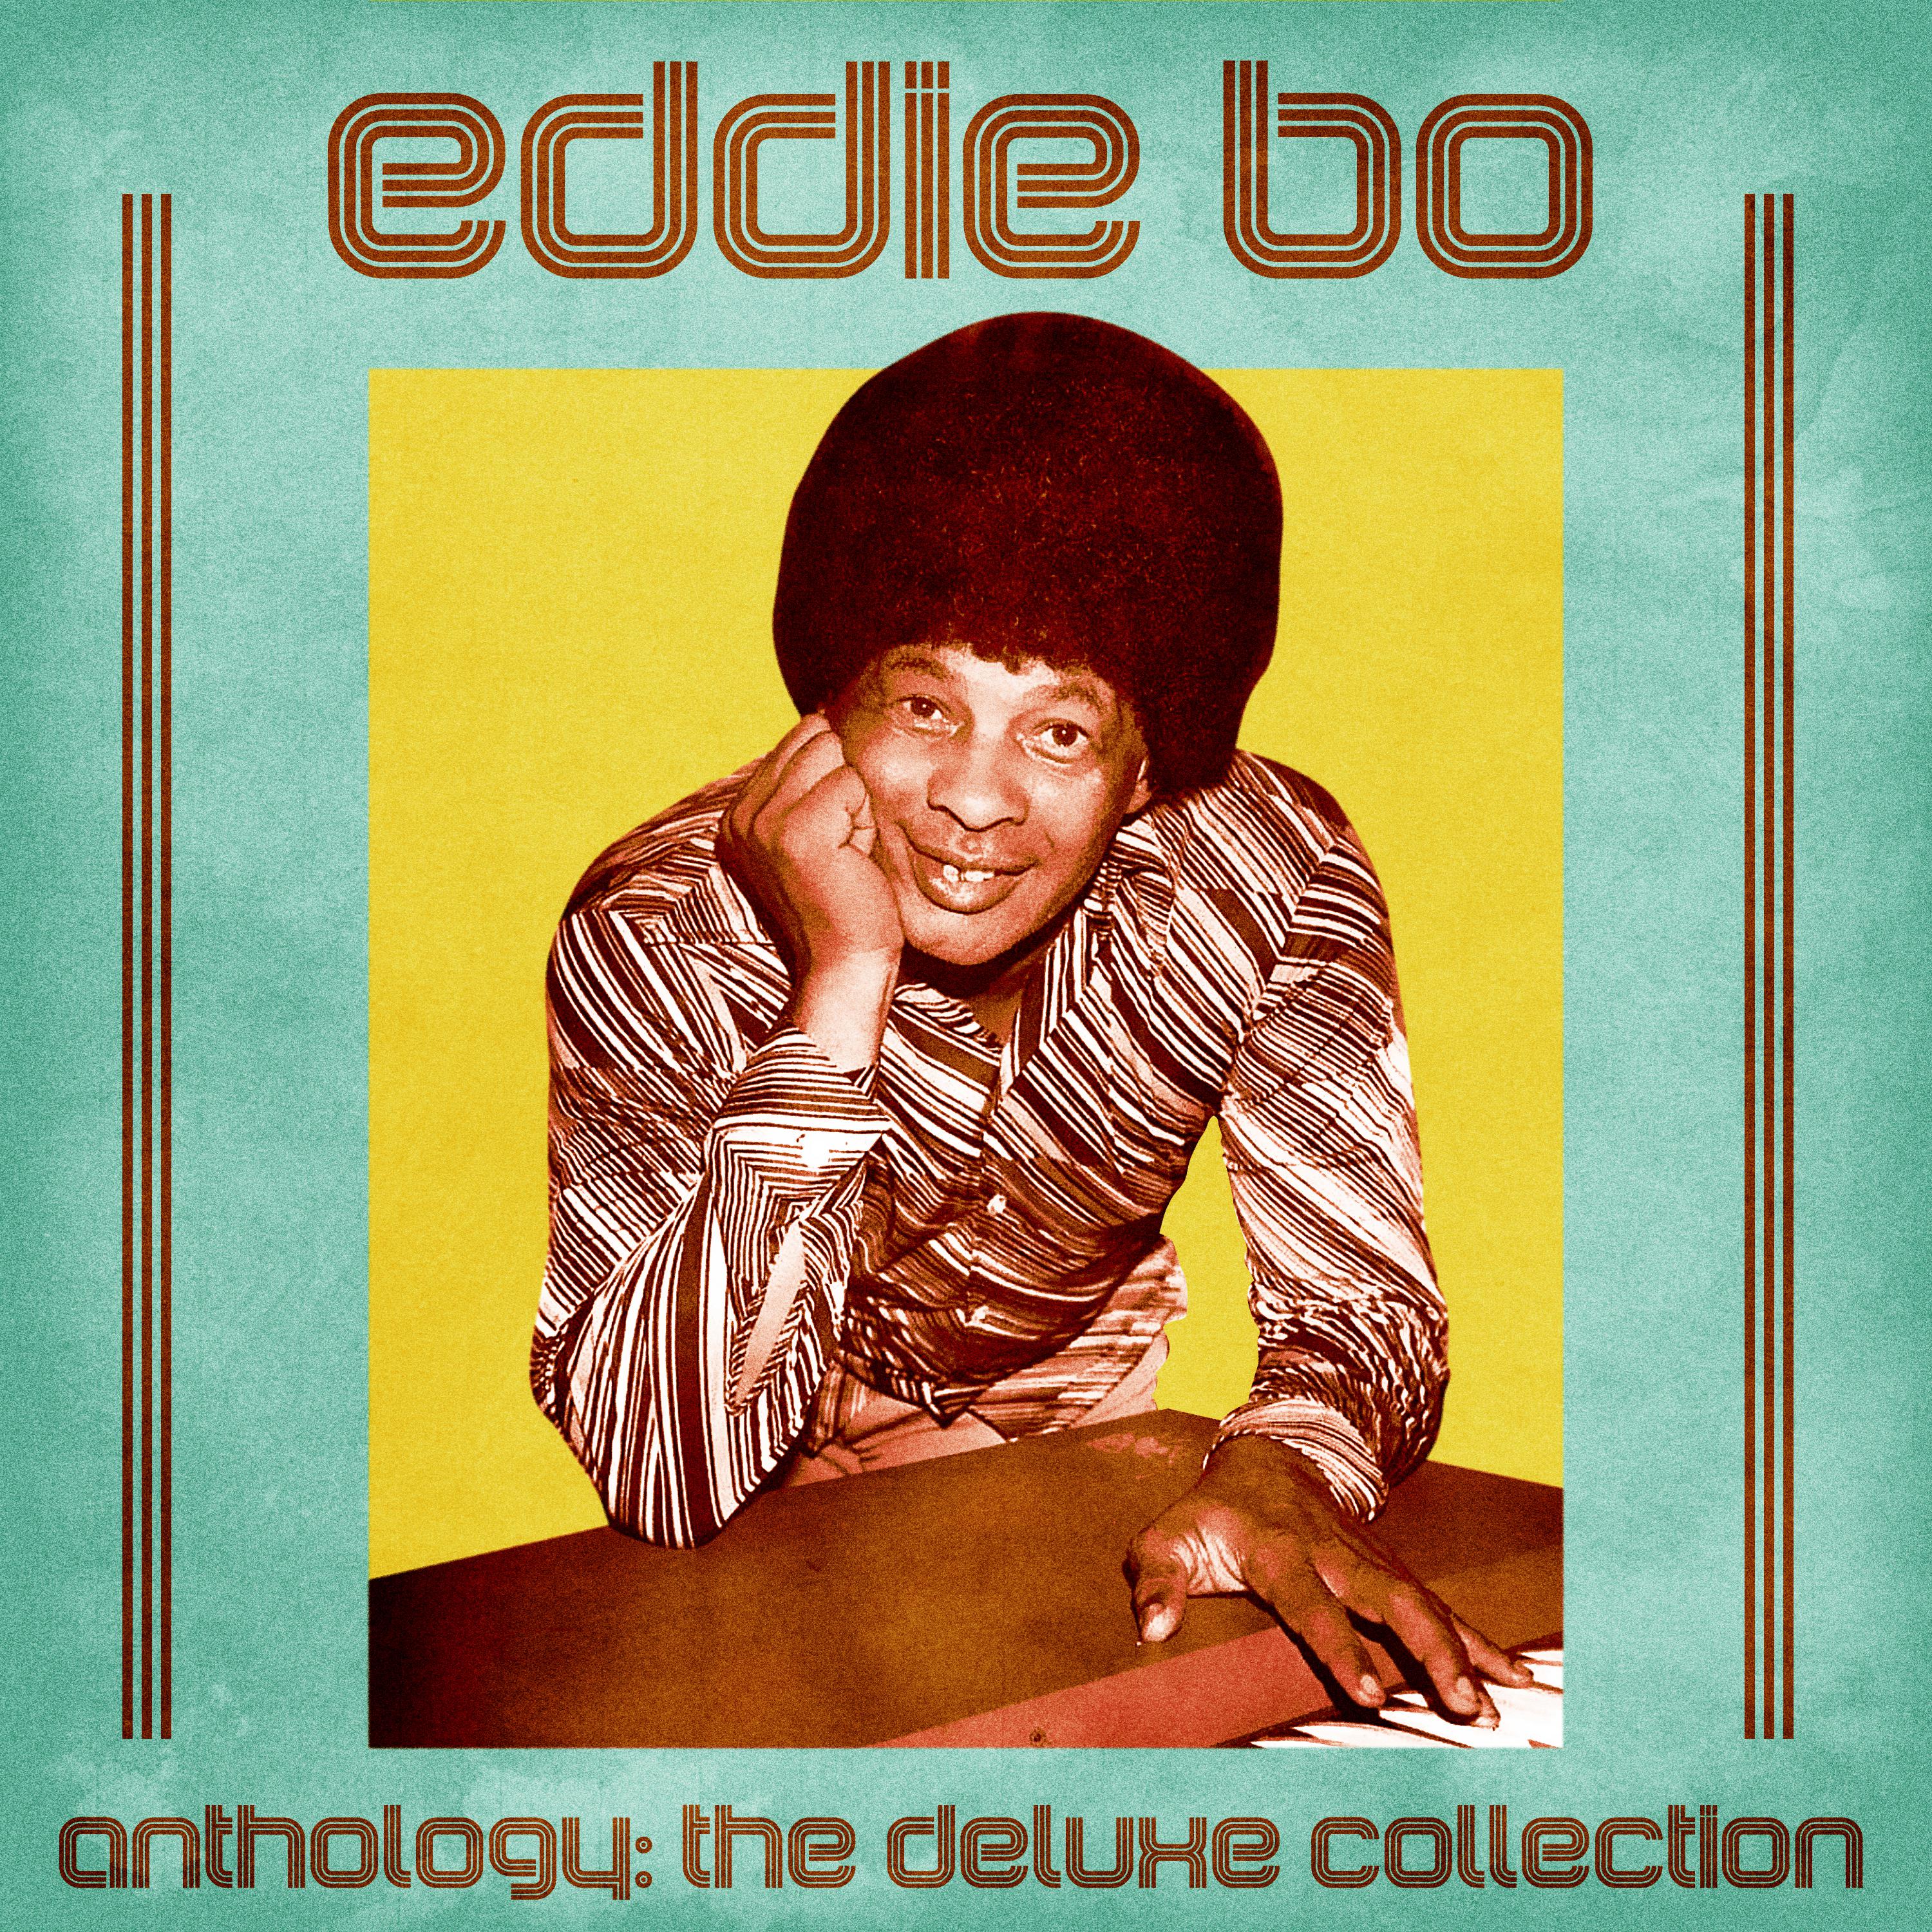 Eddie Bo - Bless You Darling (Remastered)